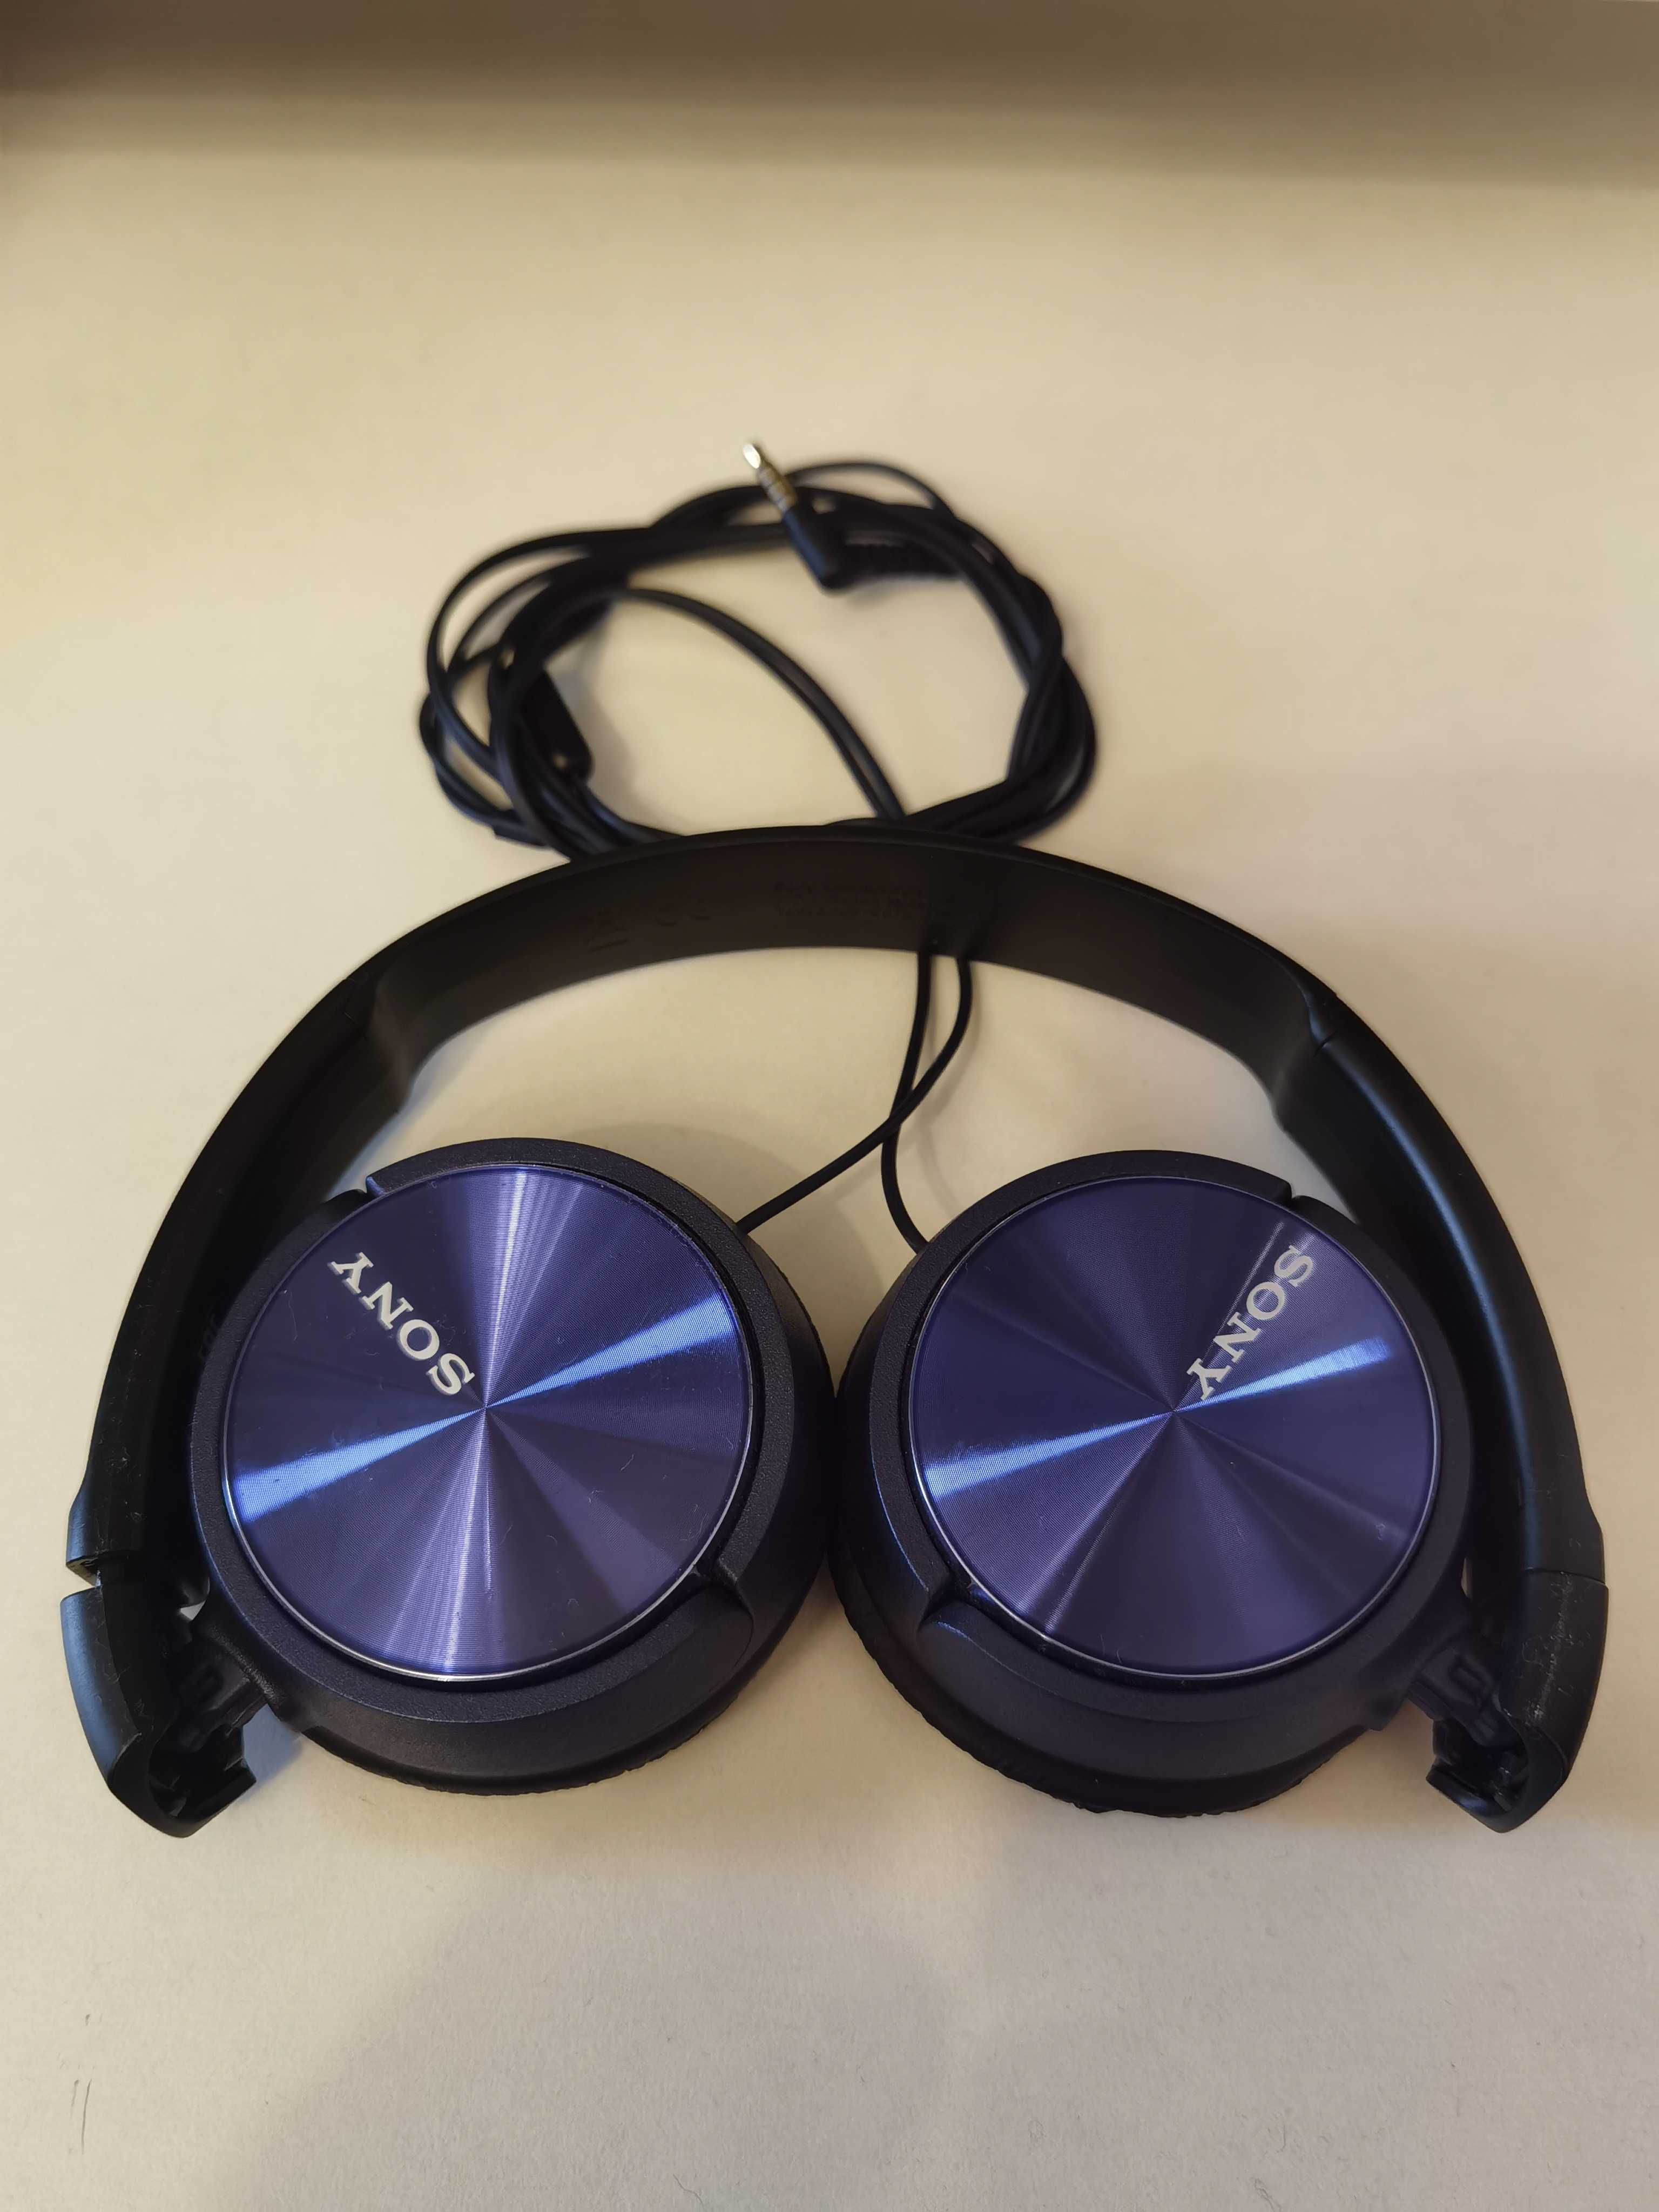 Casti On Ear Sony MDR-ZX310APL, Cu fir, Microfon, Albastru